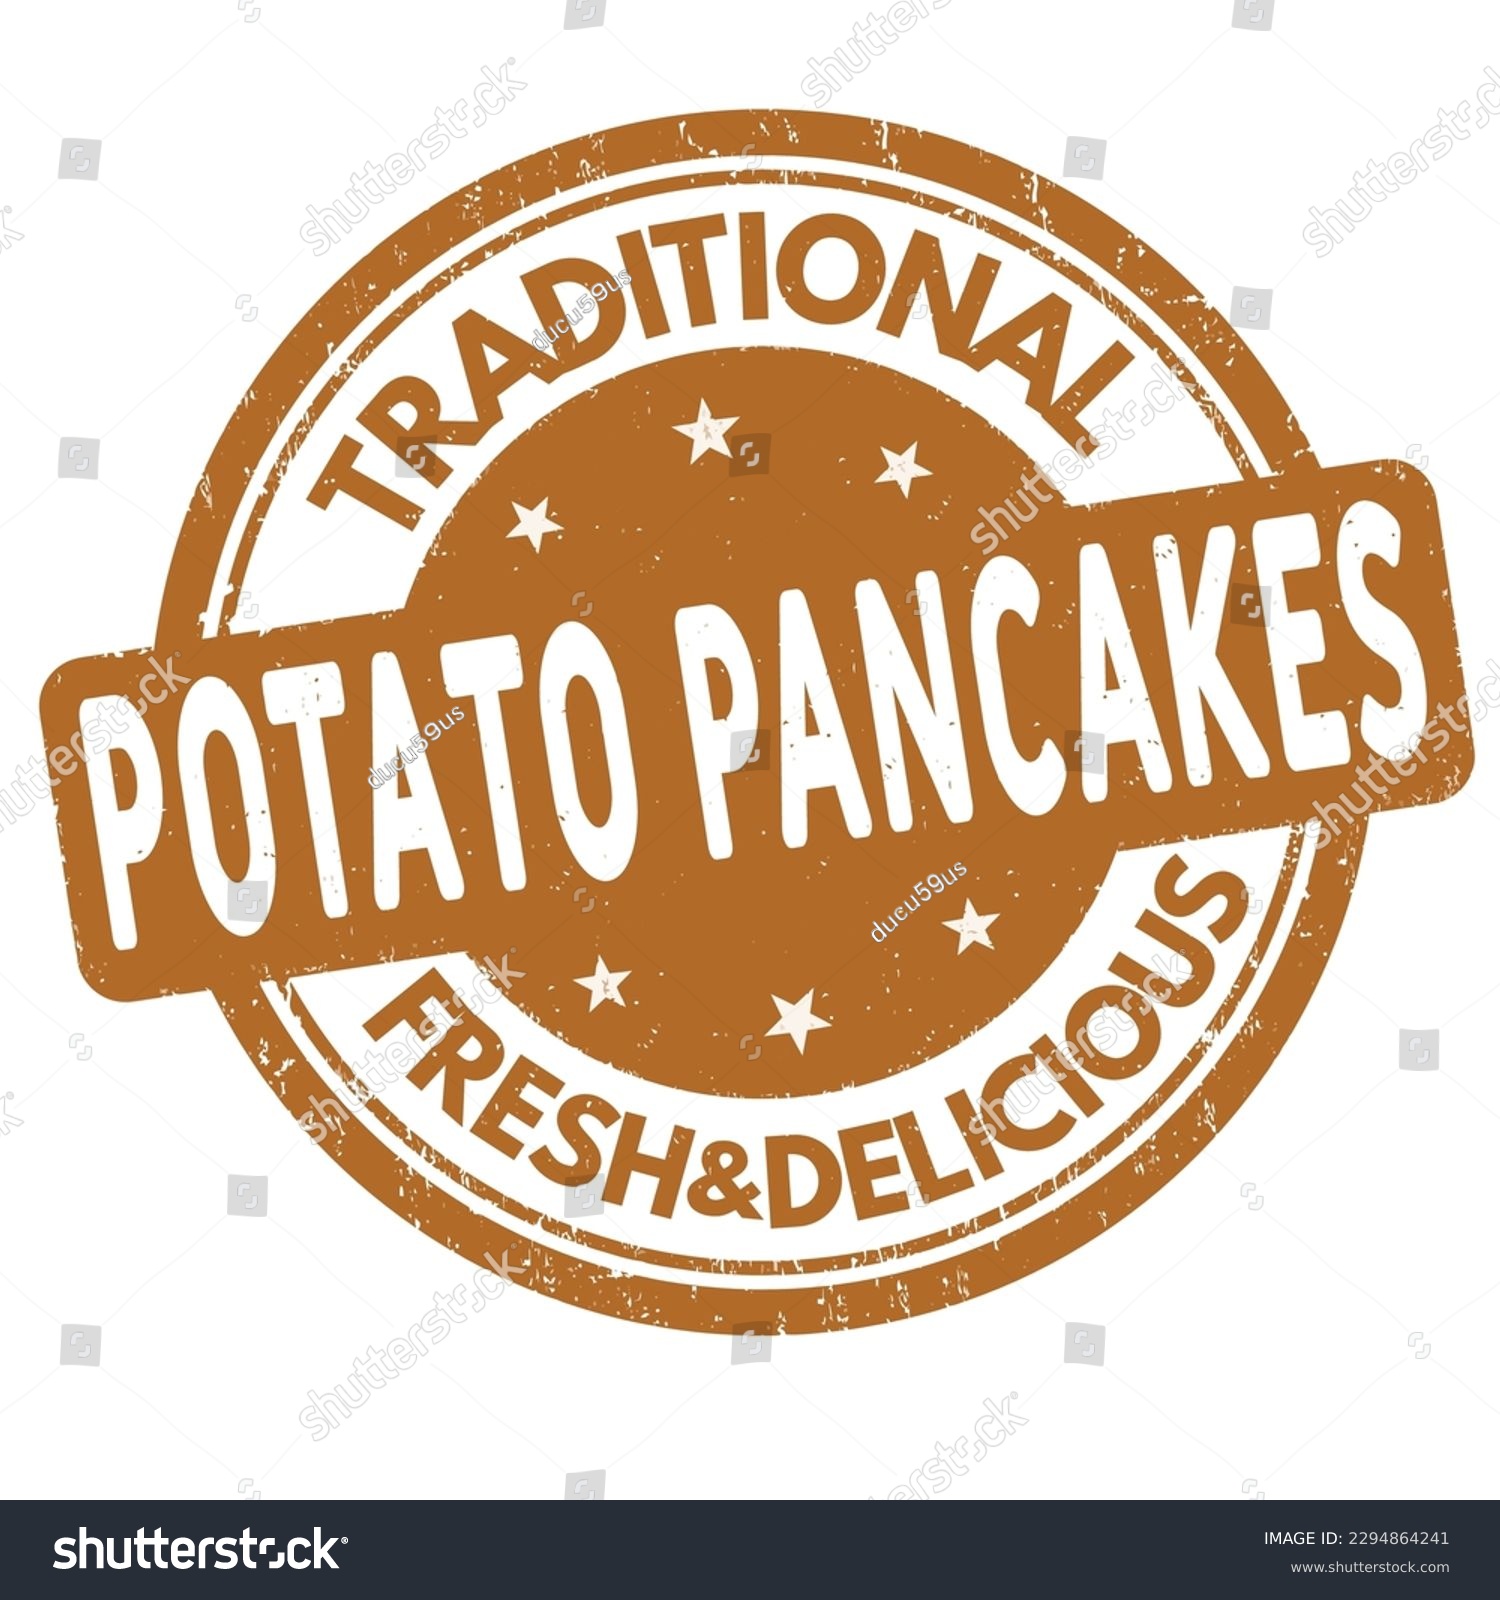 SVG of Potato pancakes grunge rubber stamp on white background, vector illustration svg